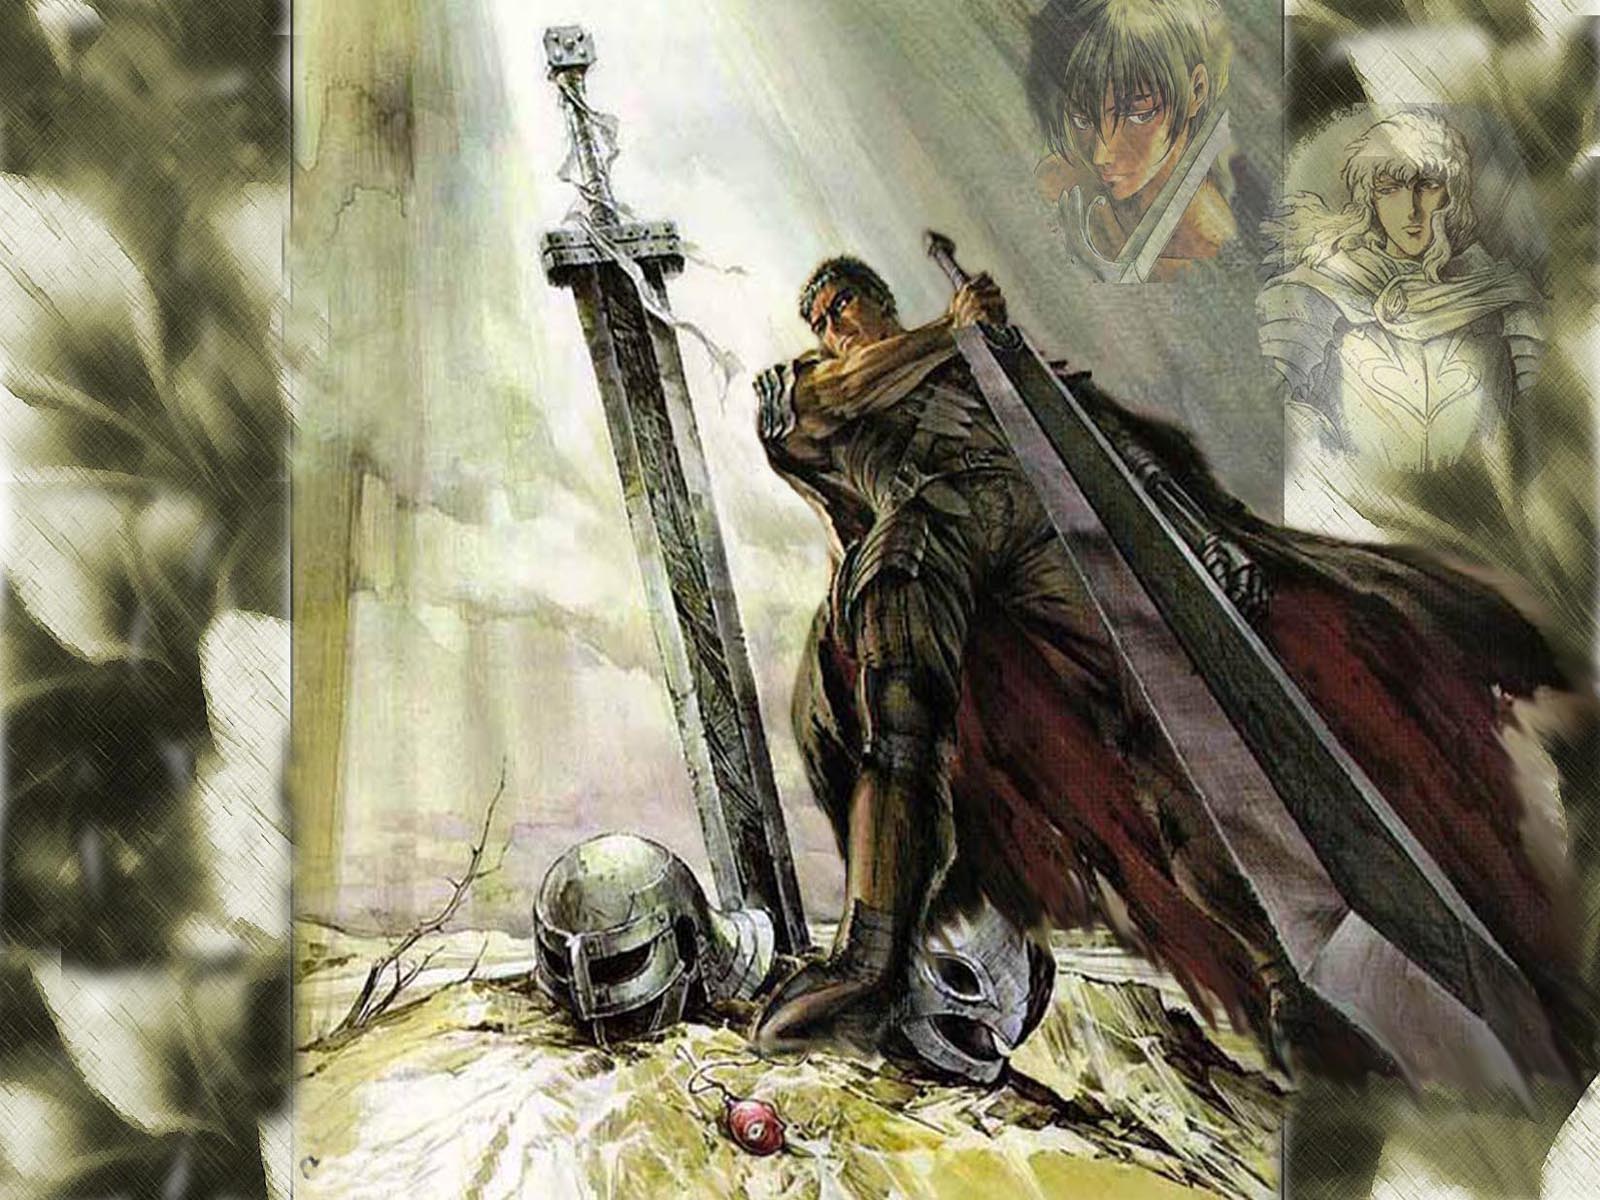 Berserk guts sword weapon fantasy wallpaper 1600x1200 75935